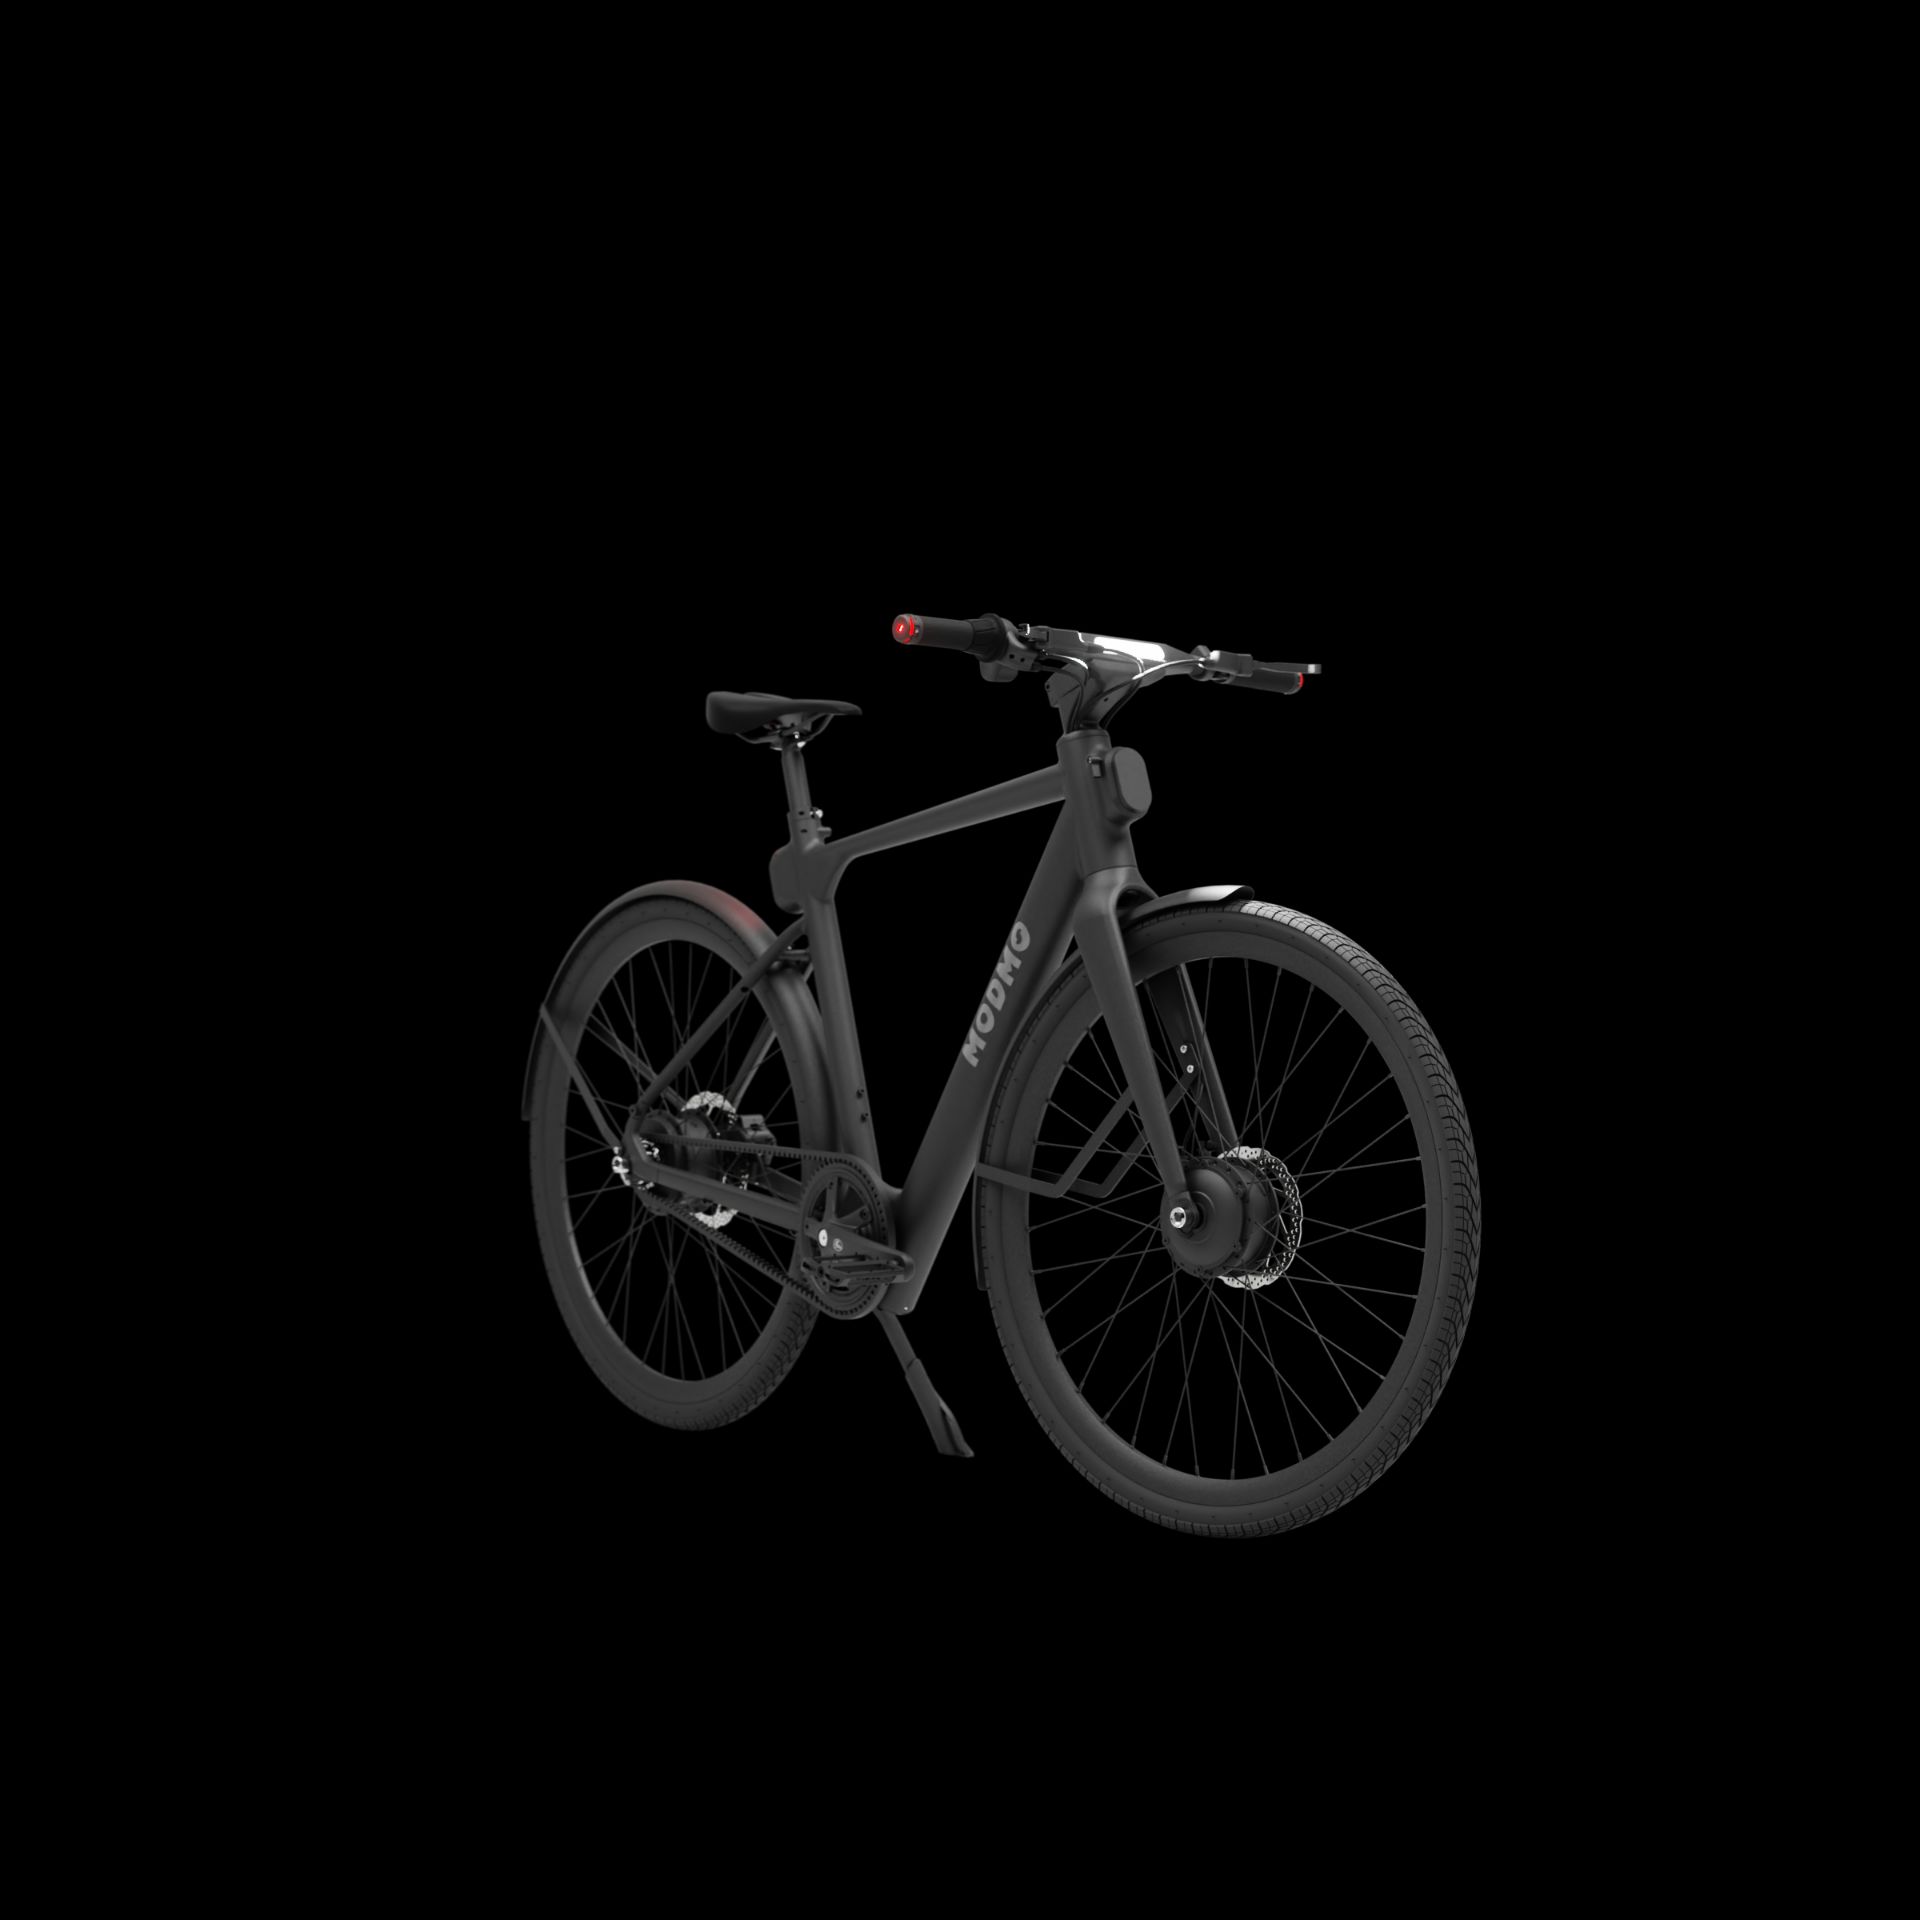 Modmo Saigon+ Electric Bicycle - RRP £2800 - Size S (Rider: 140-155cm) - Image 7 of 14